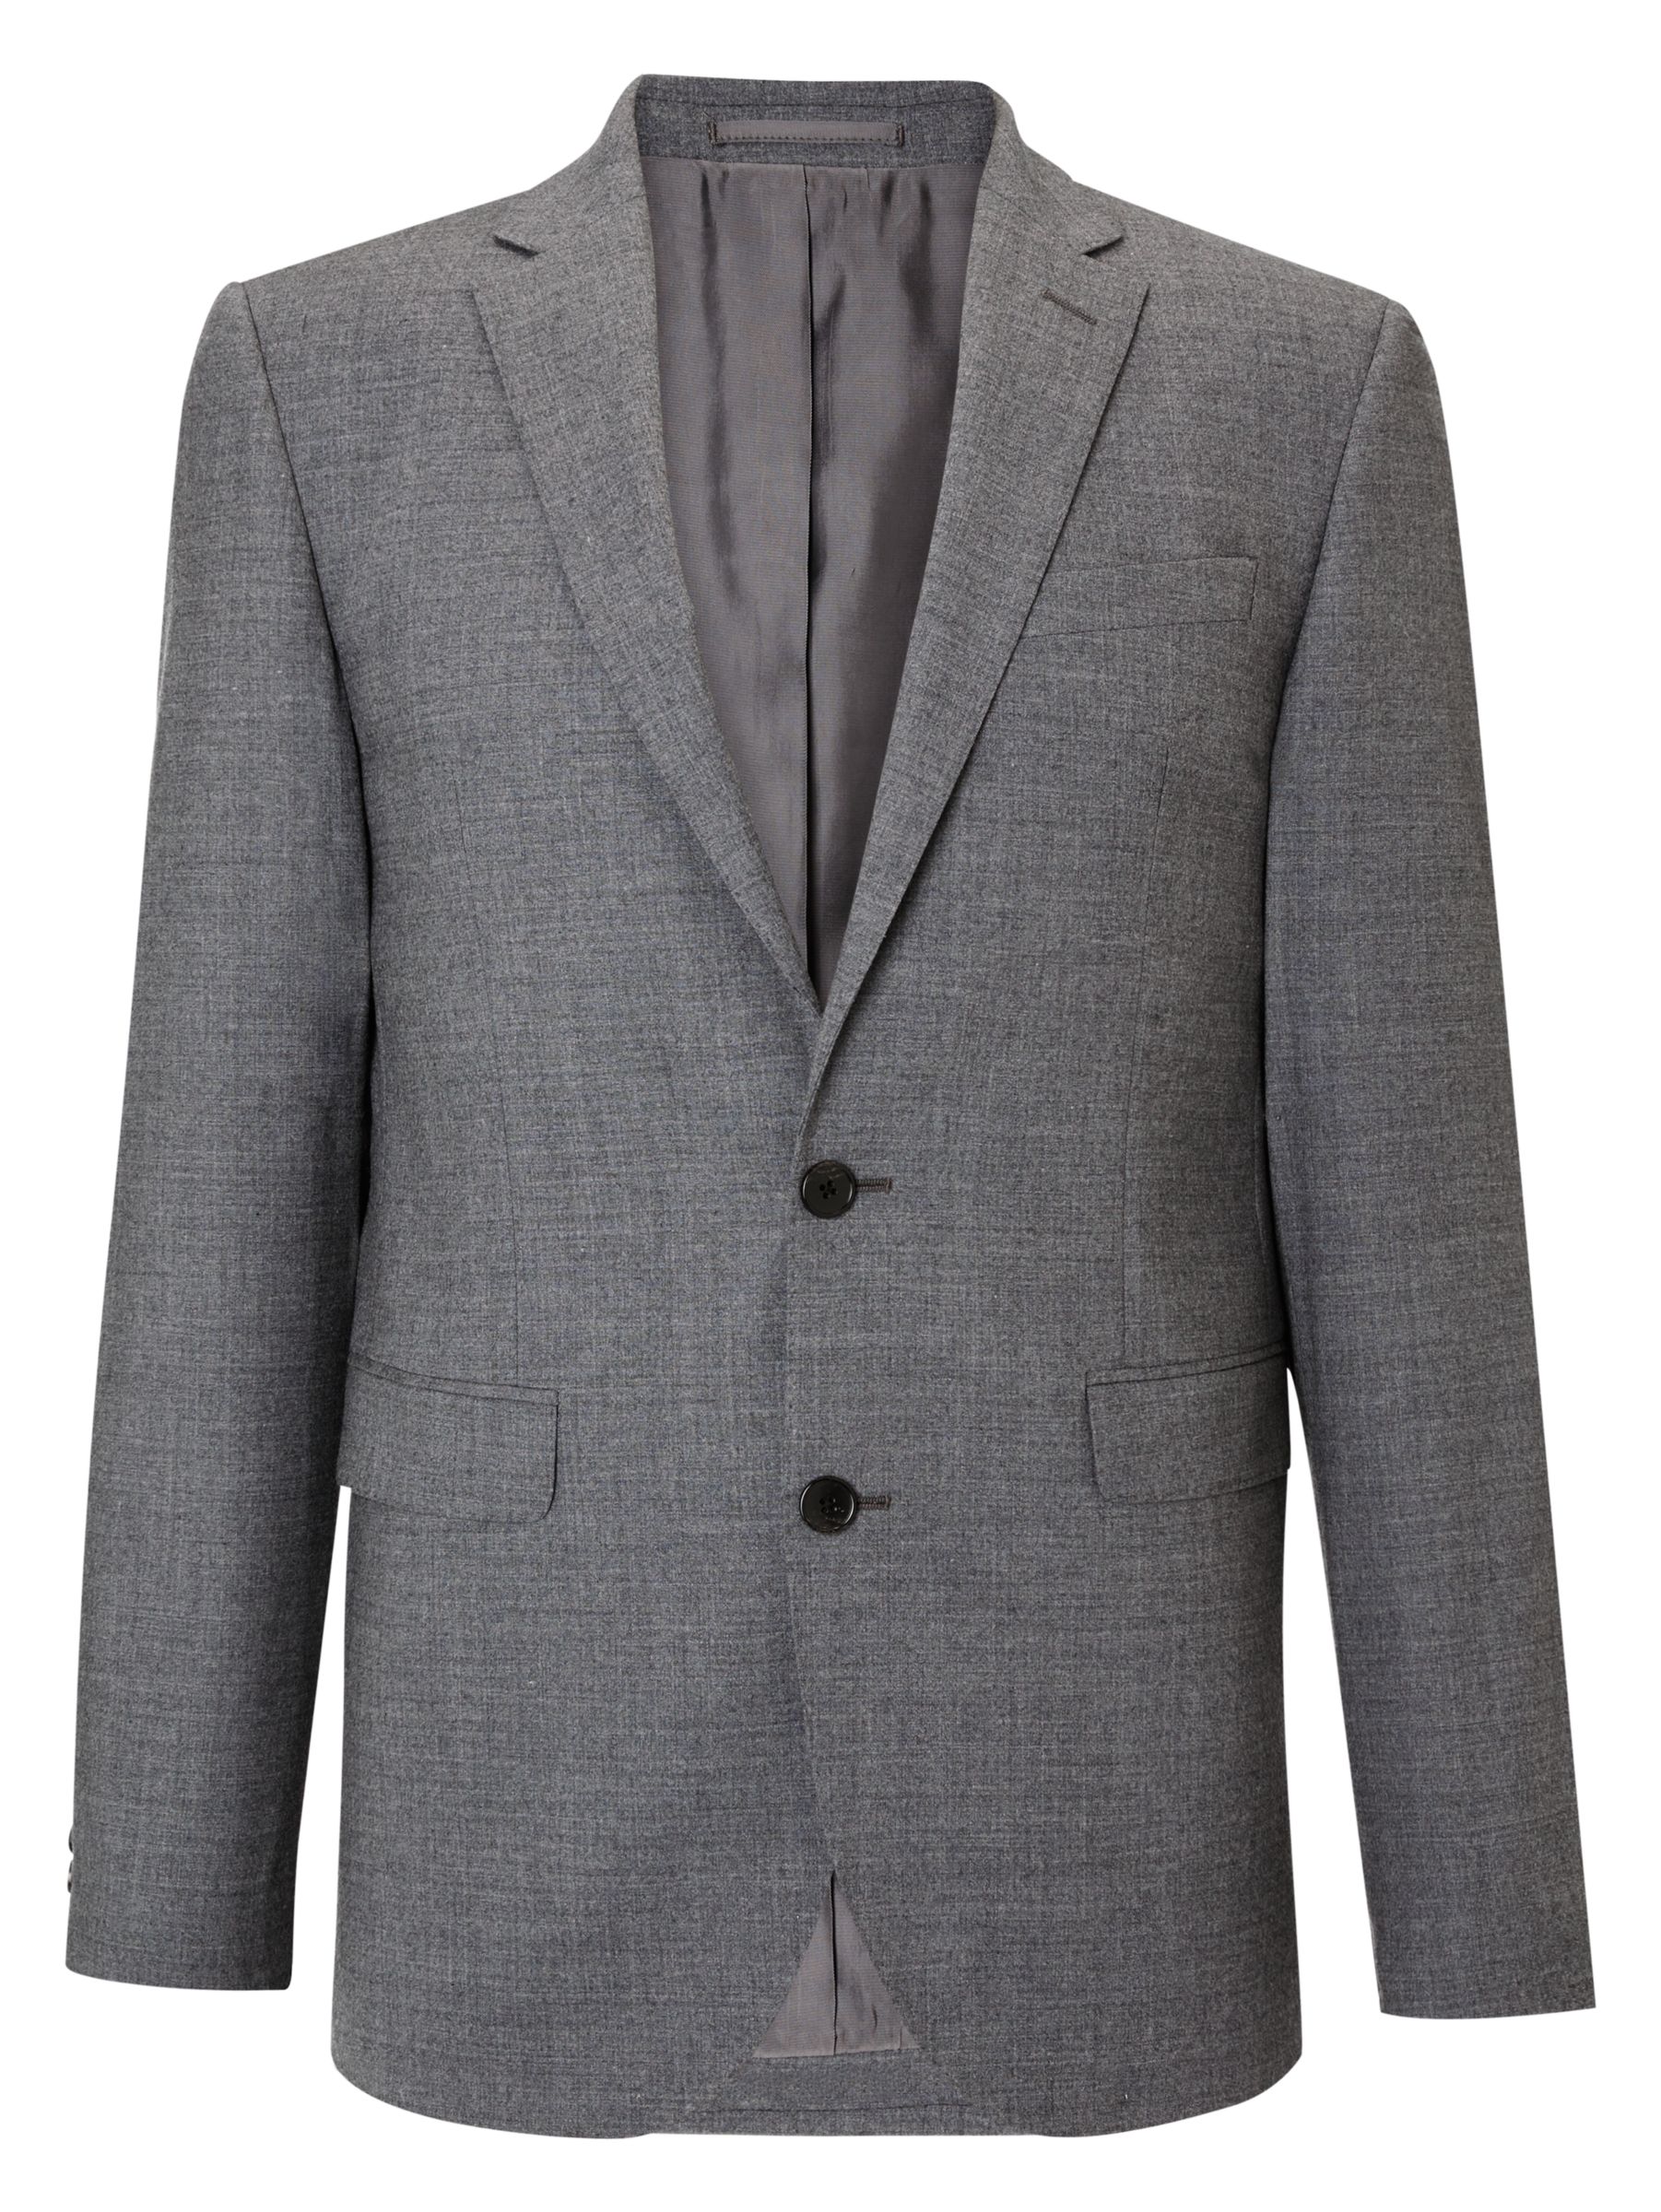 John Lewis & Partners Tailored Suit Jacket, Mid Grey